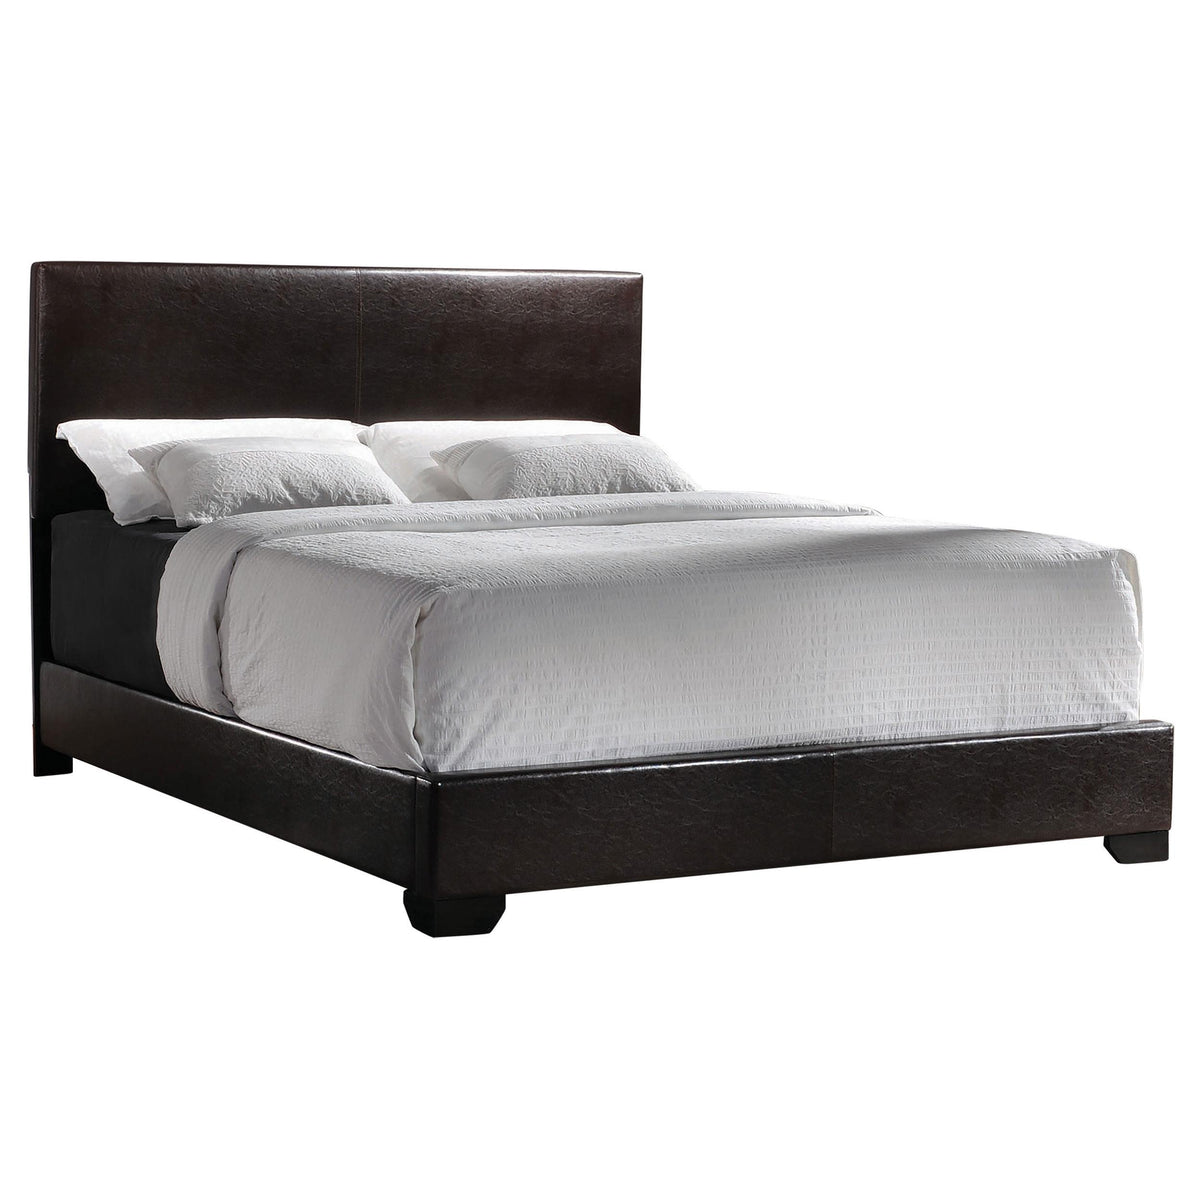 Conner Full Upholstered Panel Bed Dark Brown Conner Full Upholstered Panel Bed Dark Brown Half Price Furniture